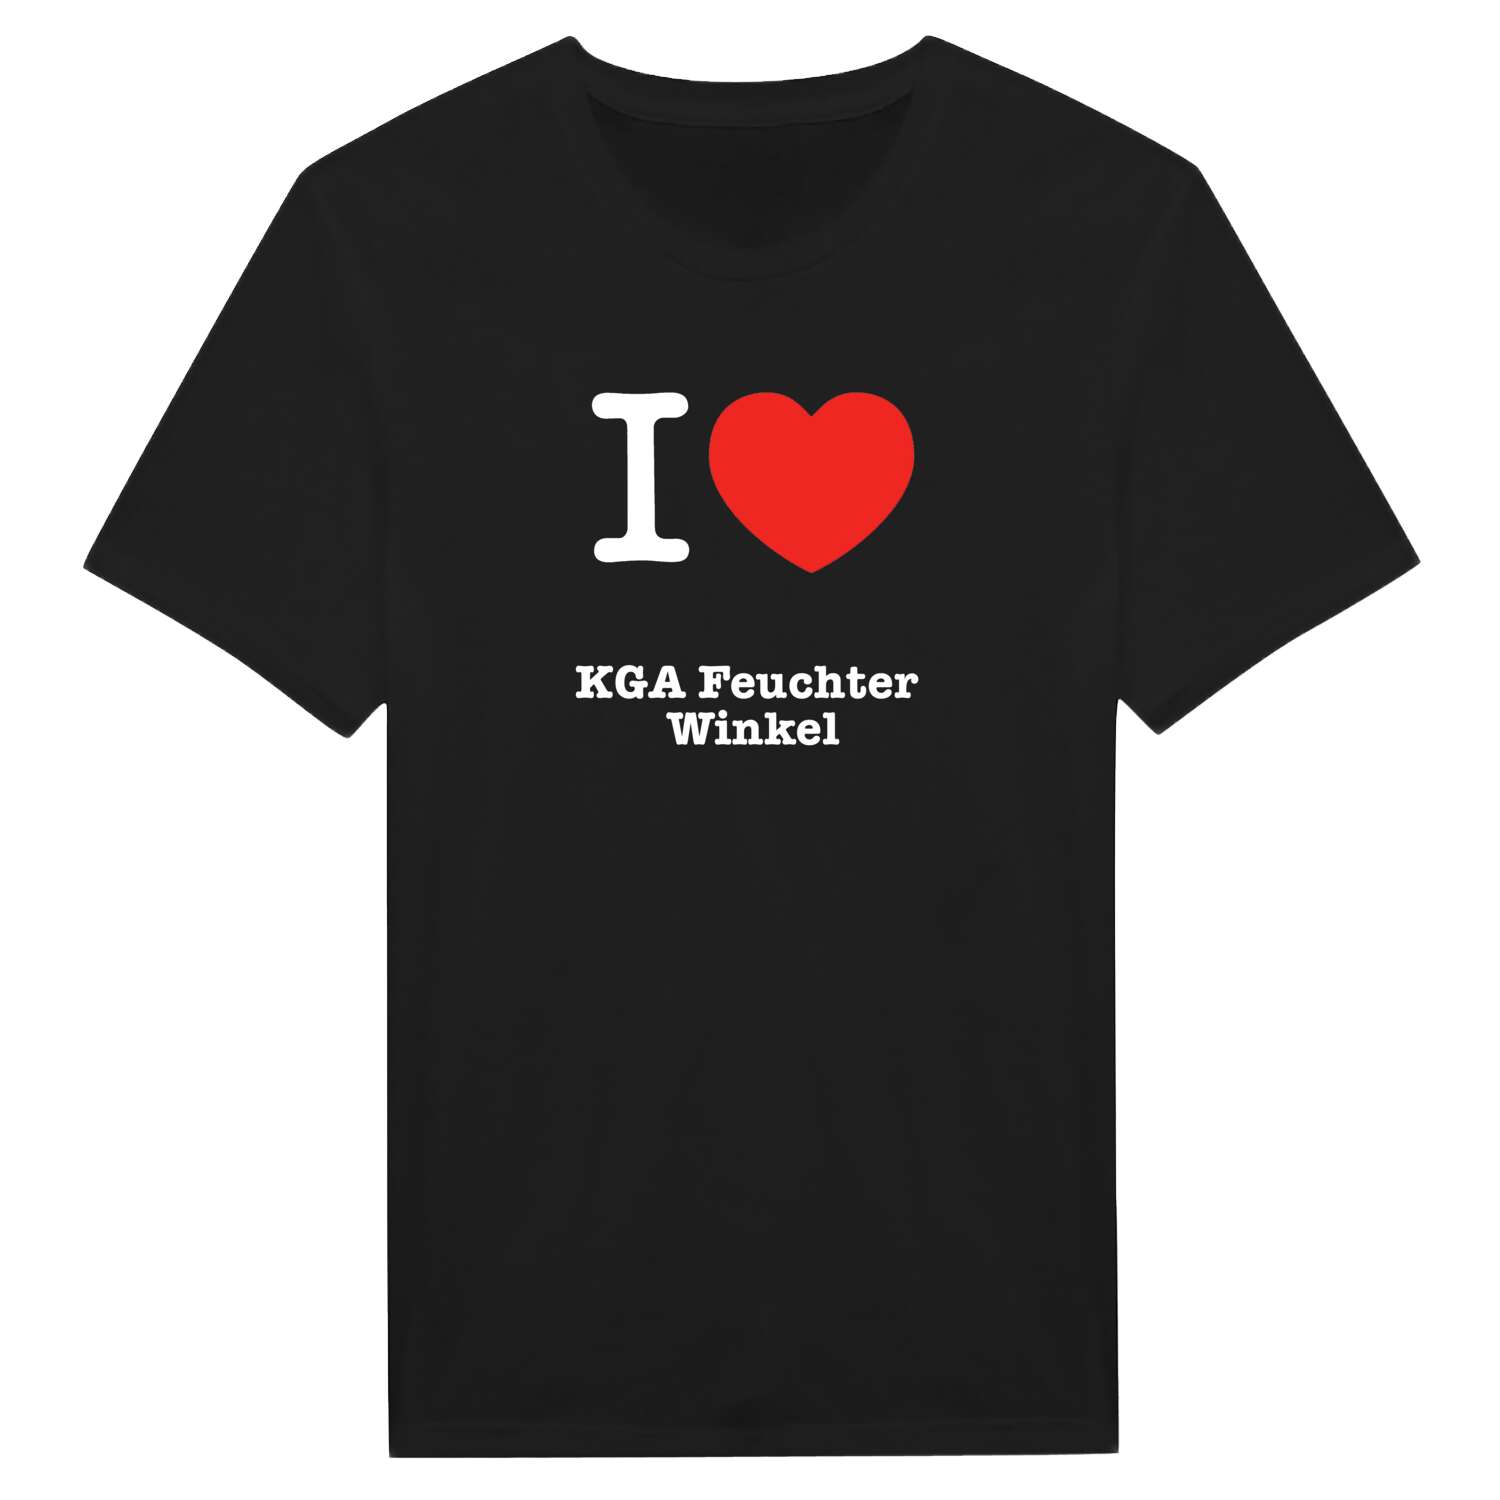 KGA Feuchter Winkel T-Shirt »I love«